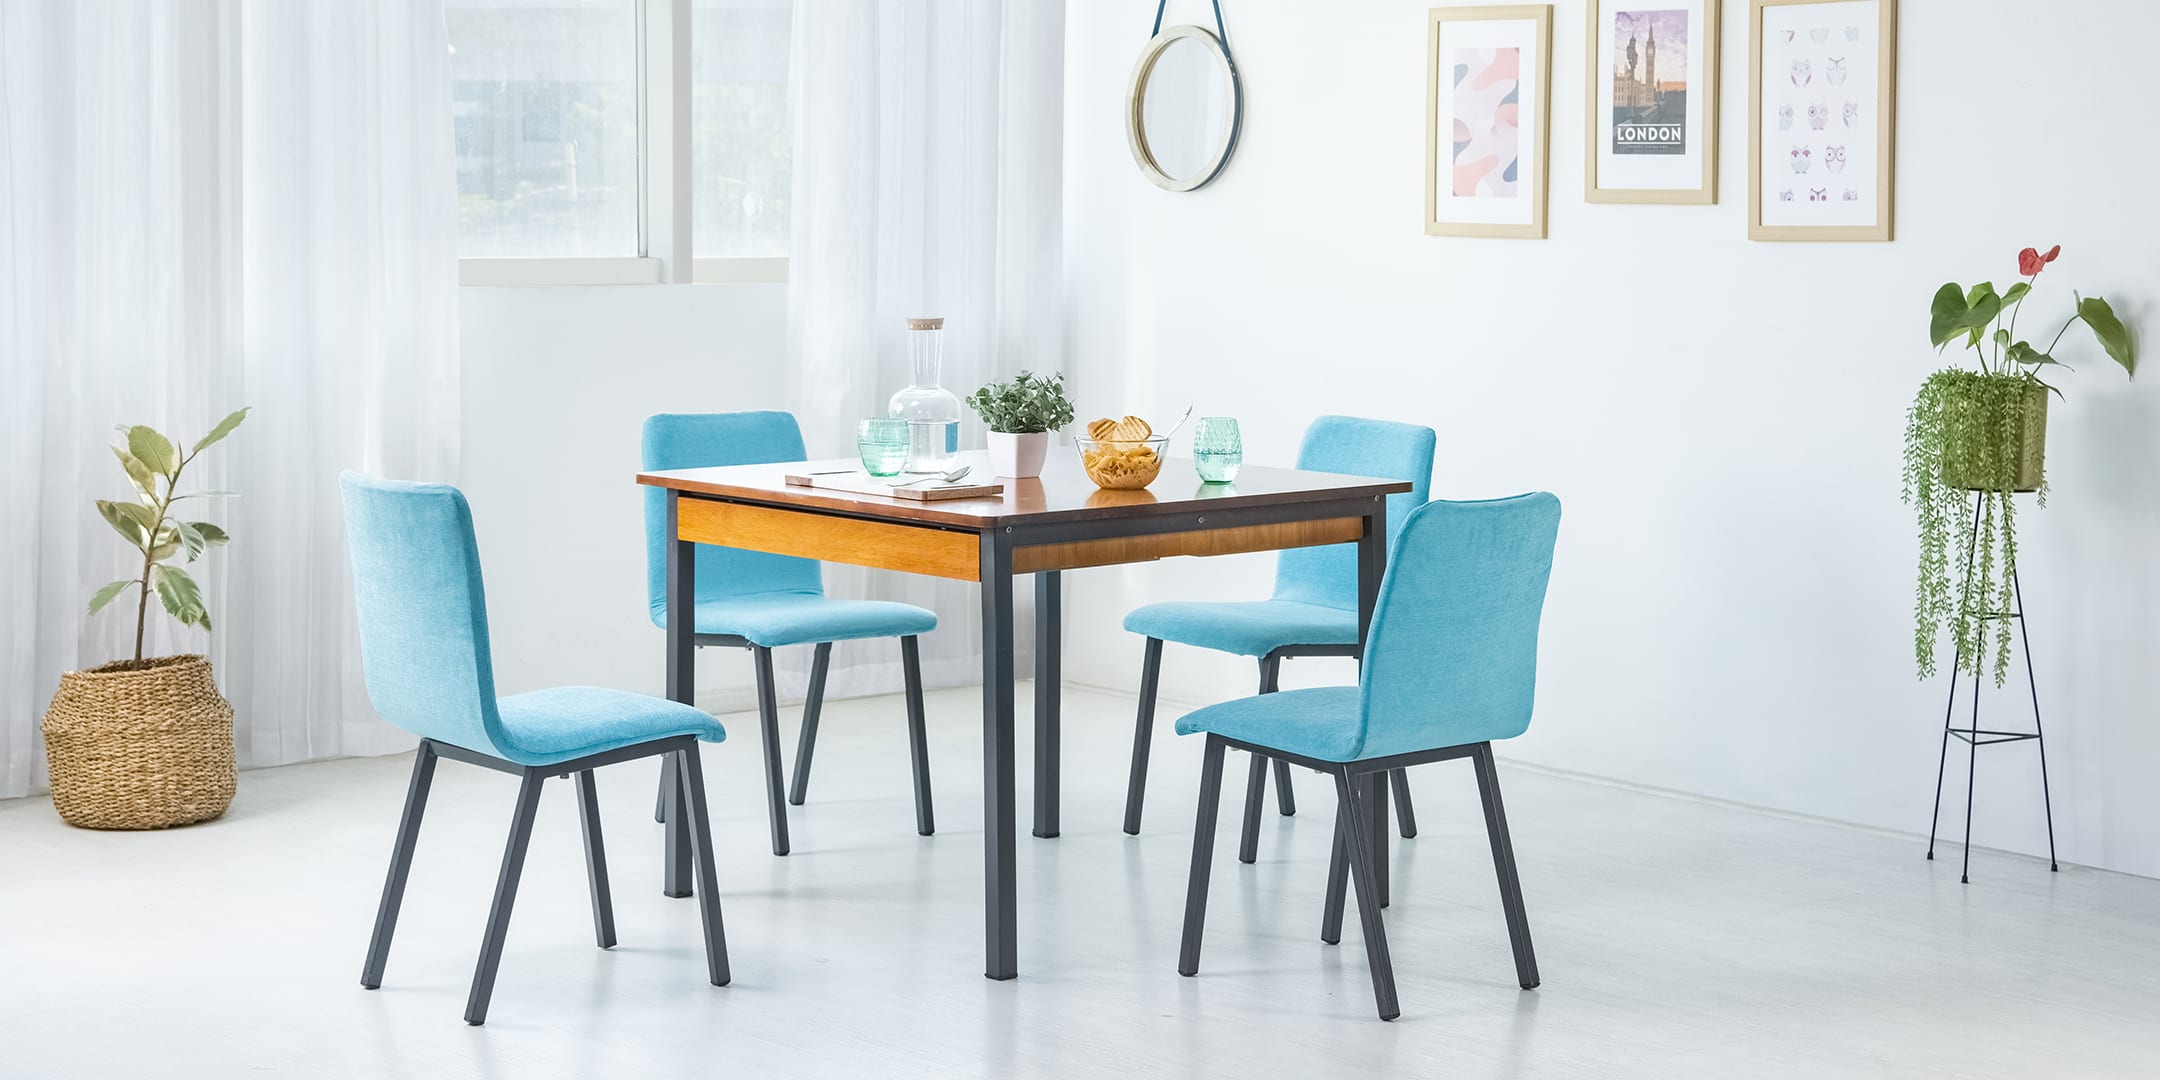 rental furniture dining table